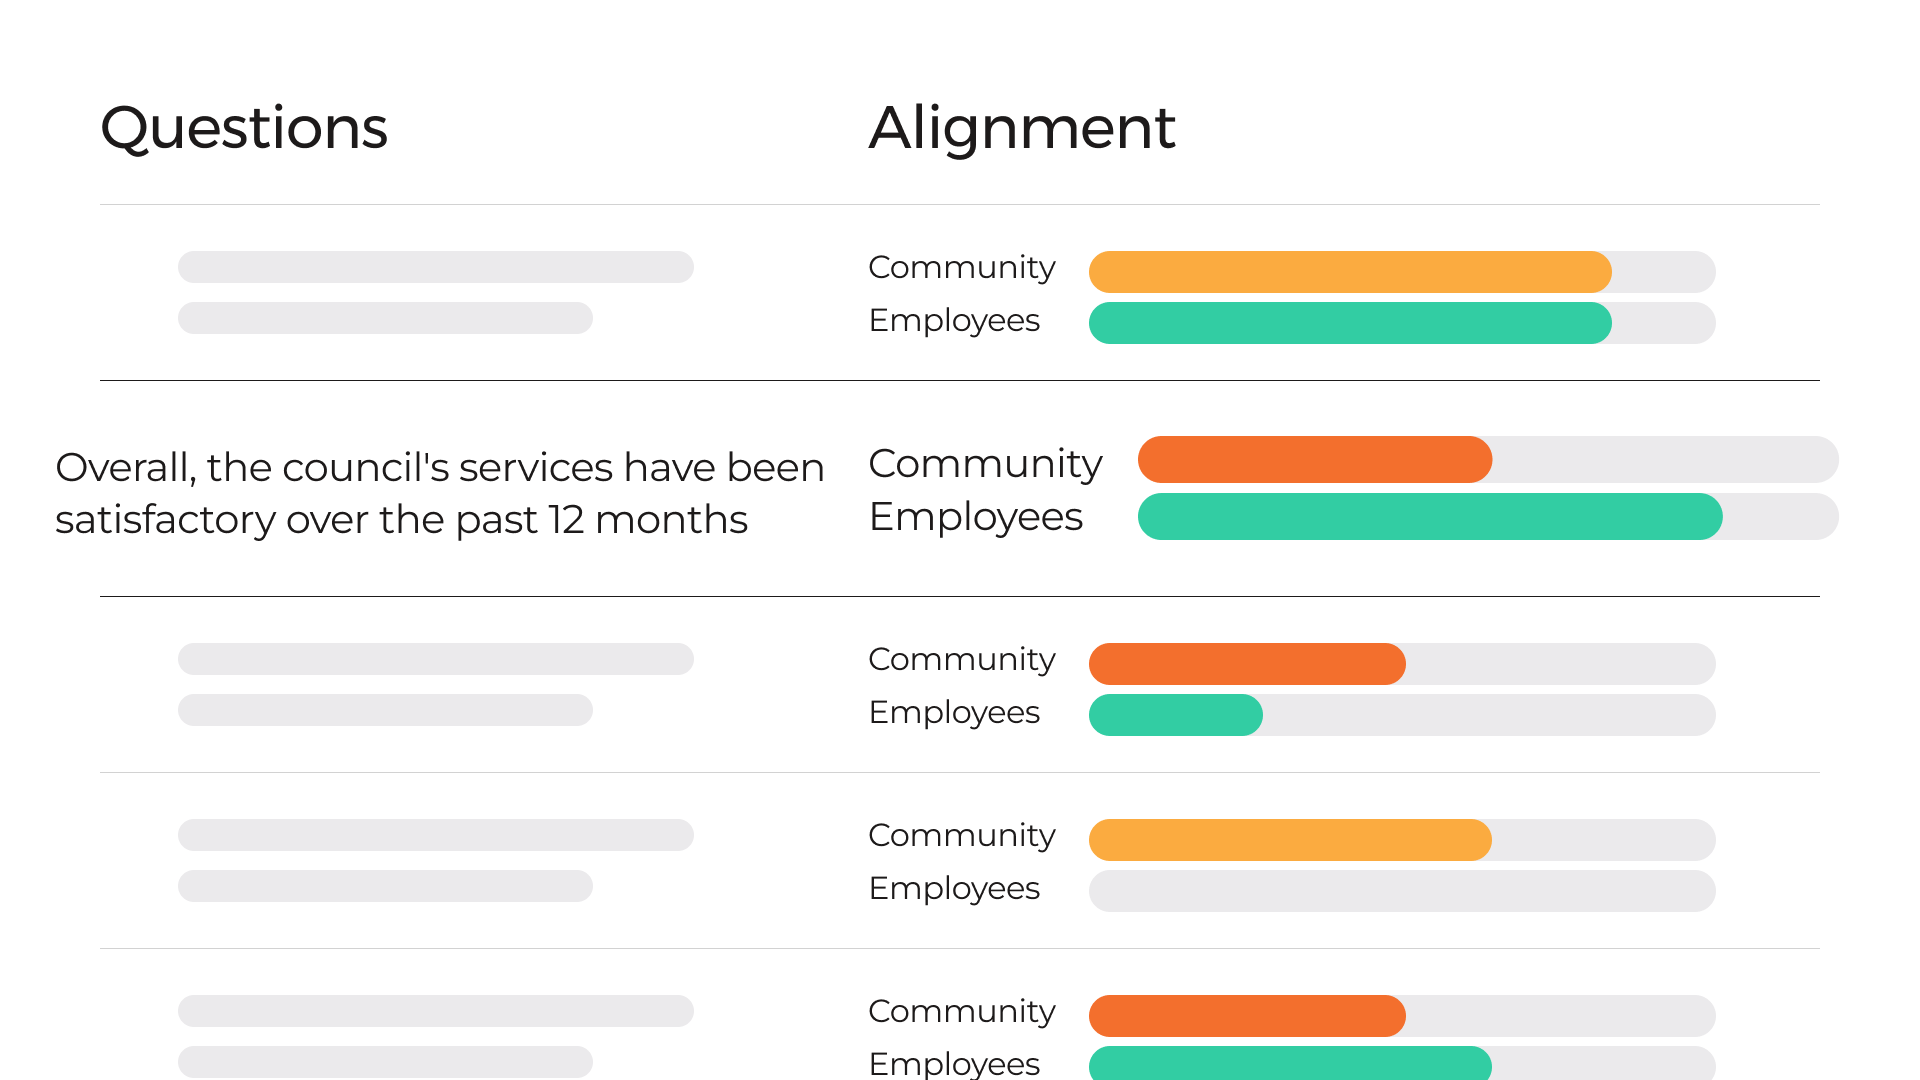 employee and community comparison survey question showing community engagement levels